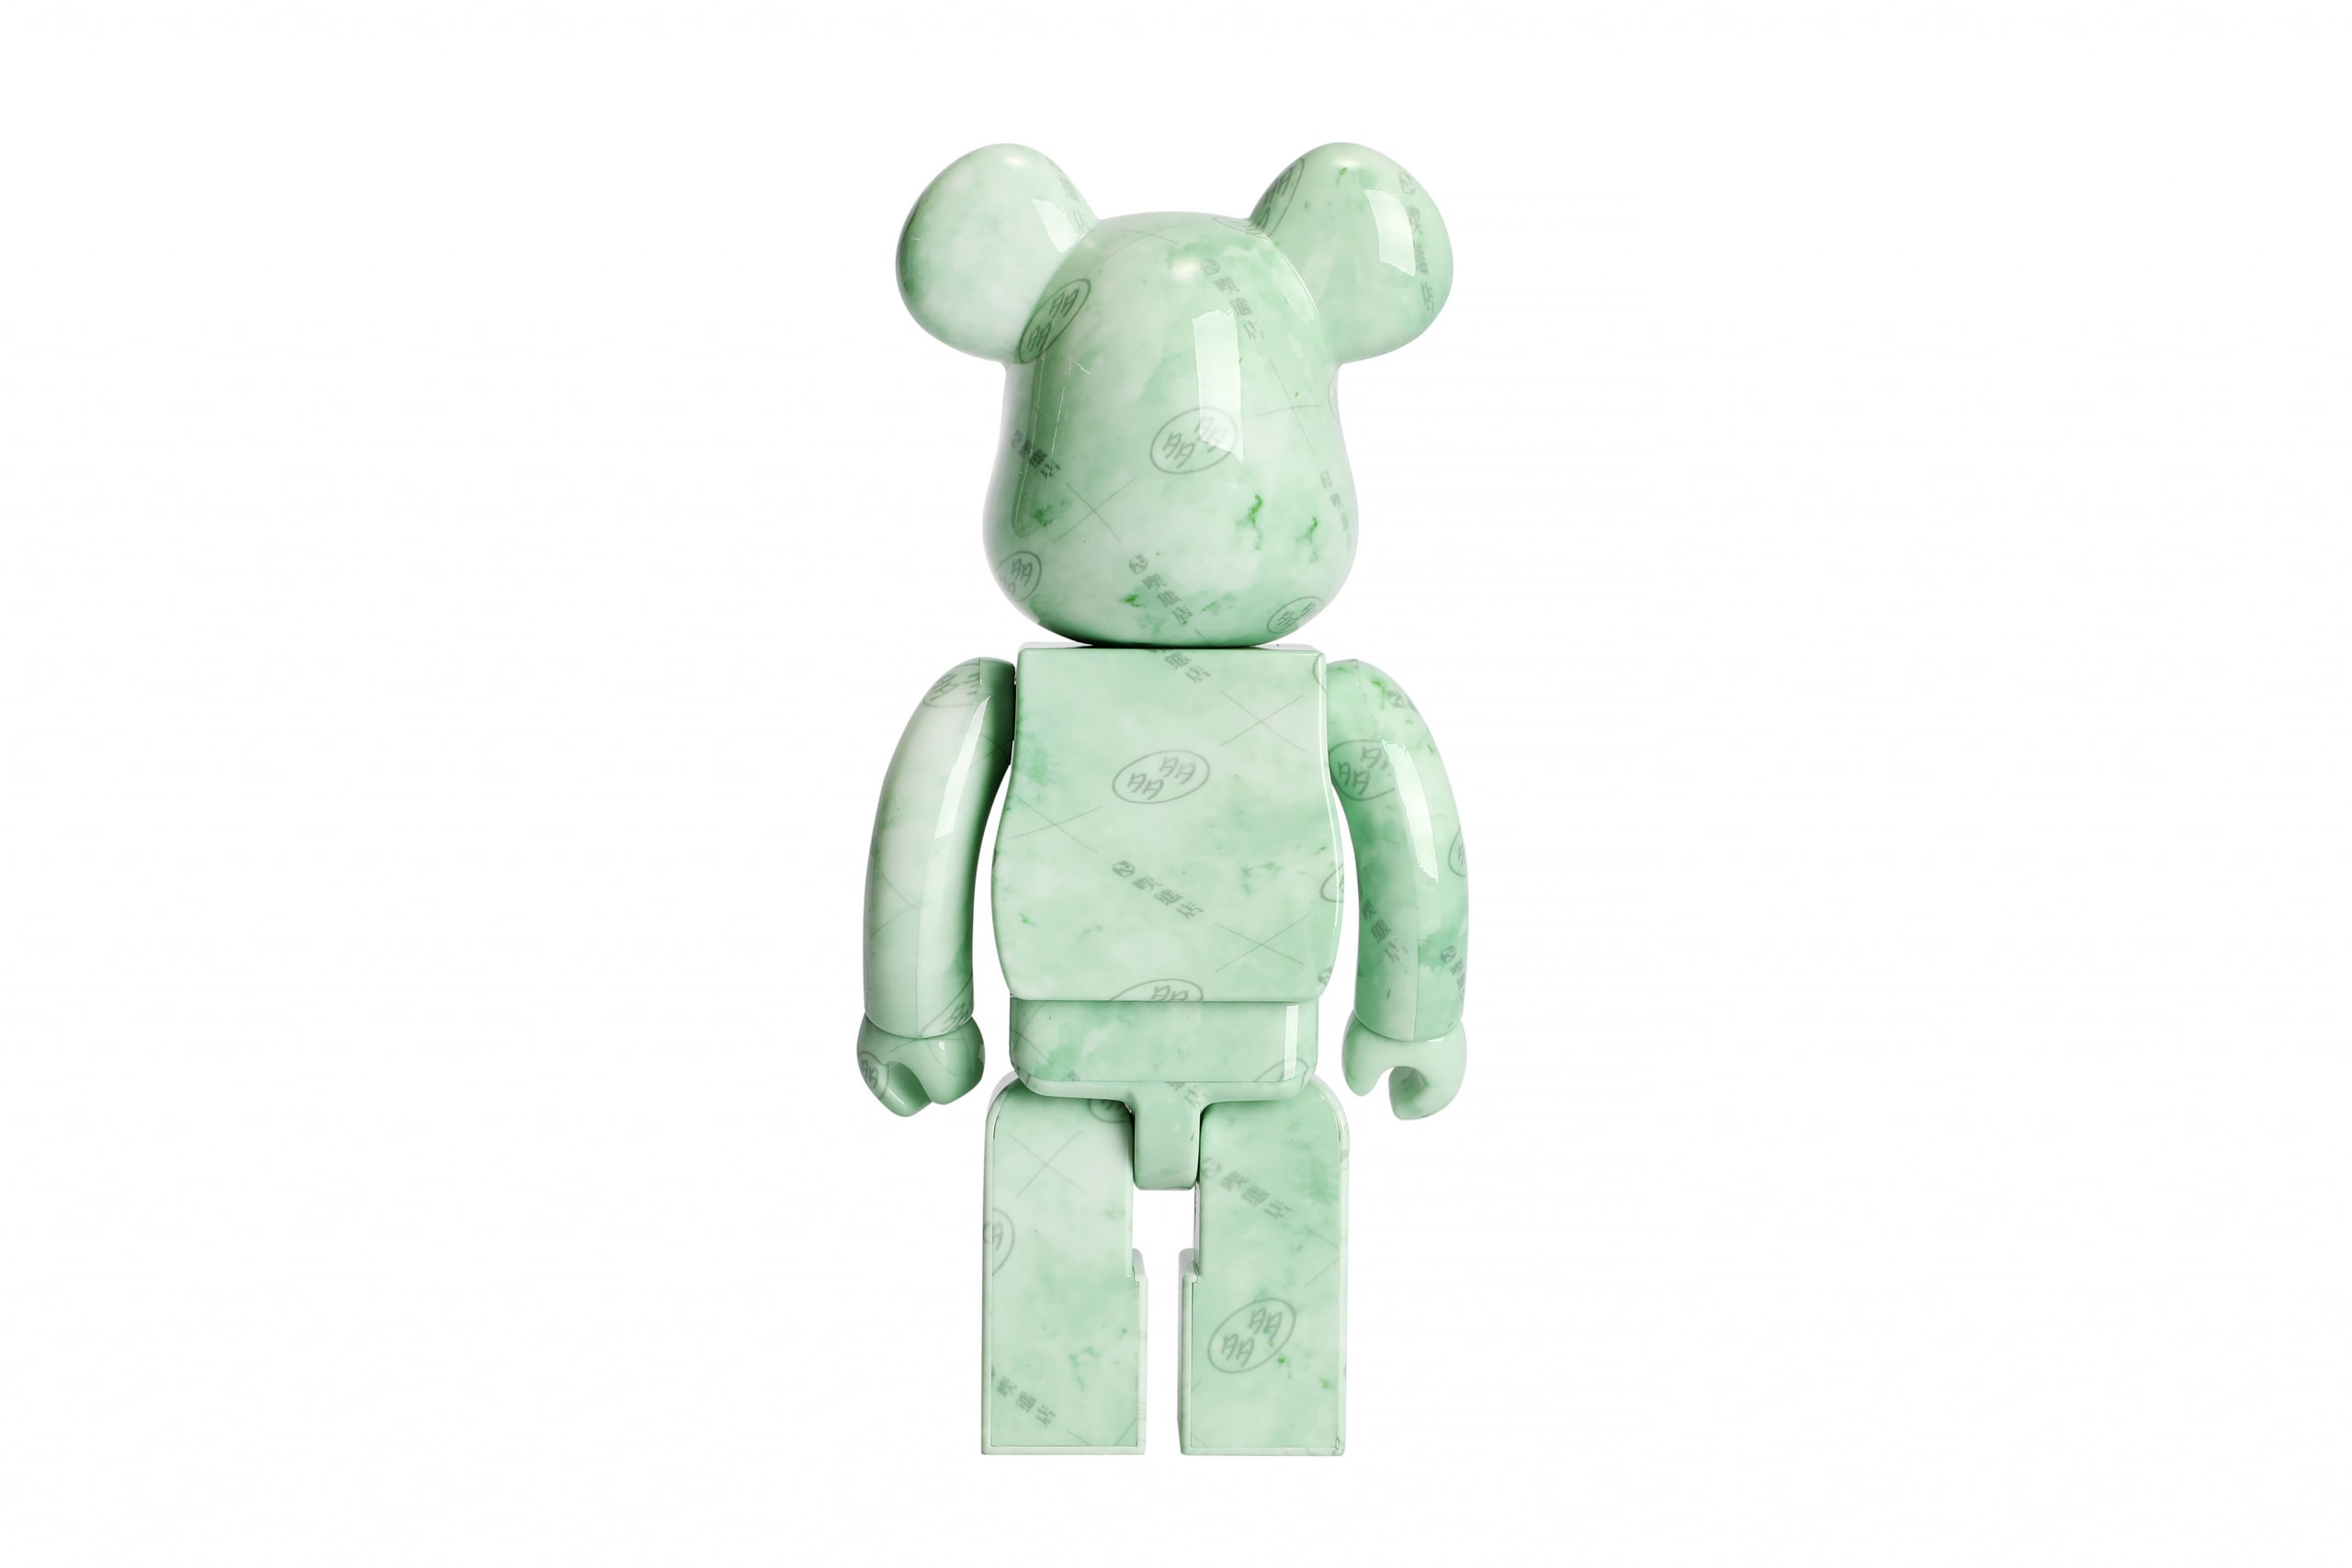 dada service medicom toy bearbrick 100 400 watermarked jade stone green nubian release info date price hbx